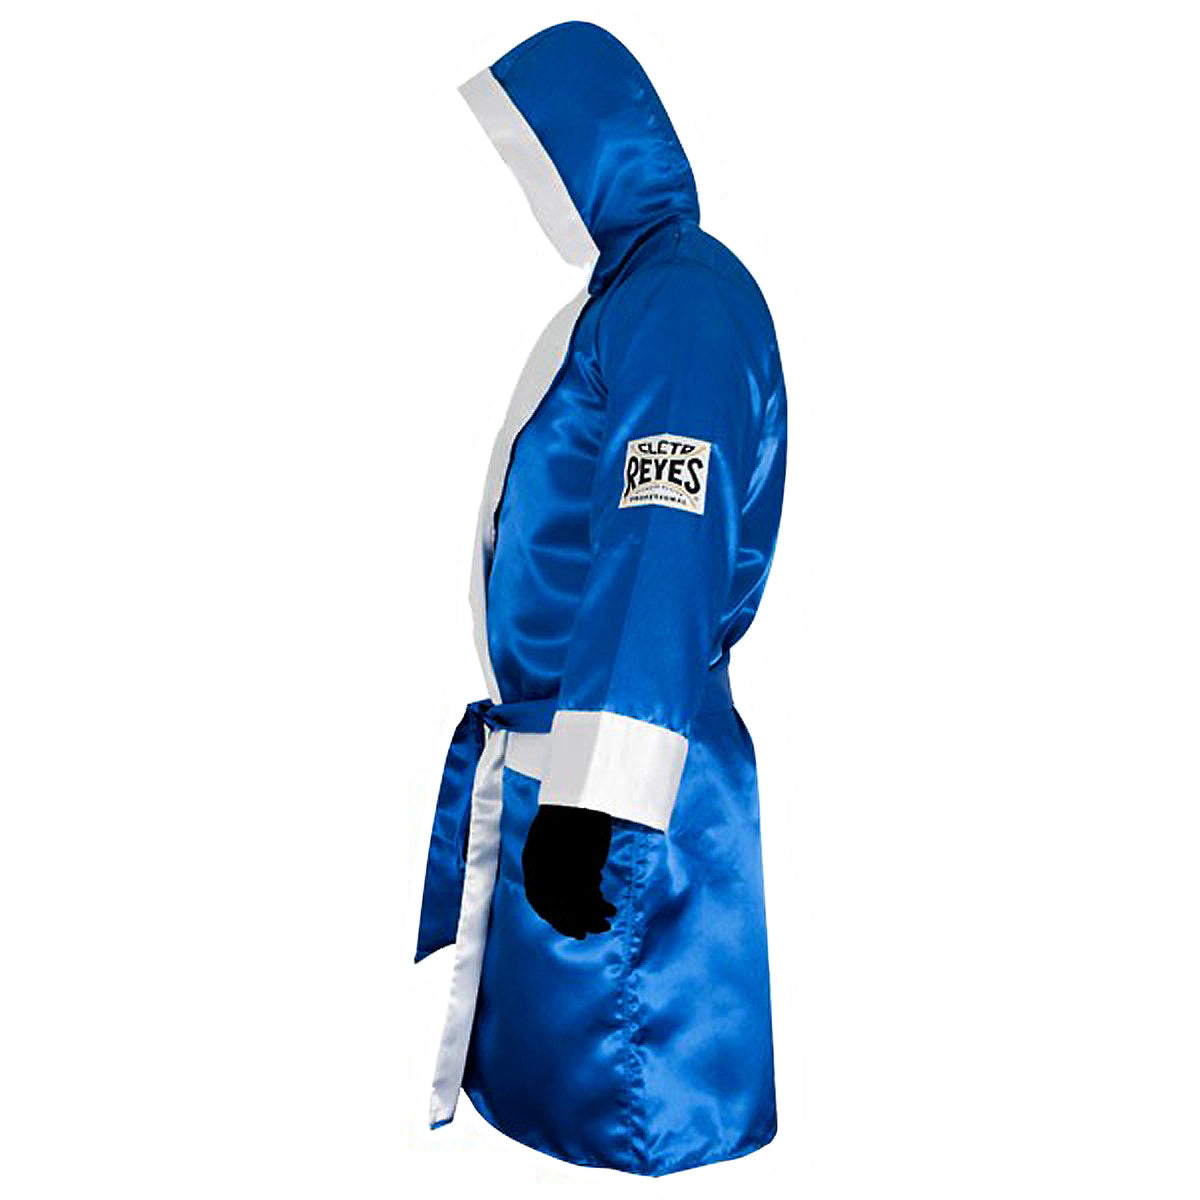 Cleto Reyes Satin Boxing Robe with Hood - Medium - Blue/White Cleto Reyes